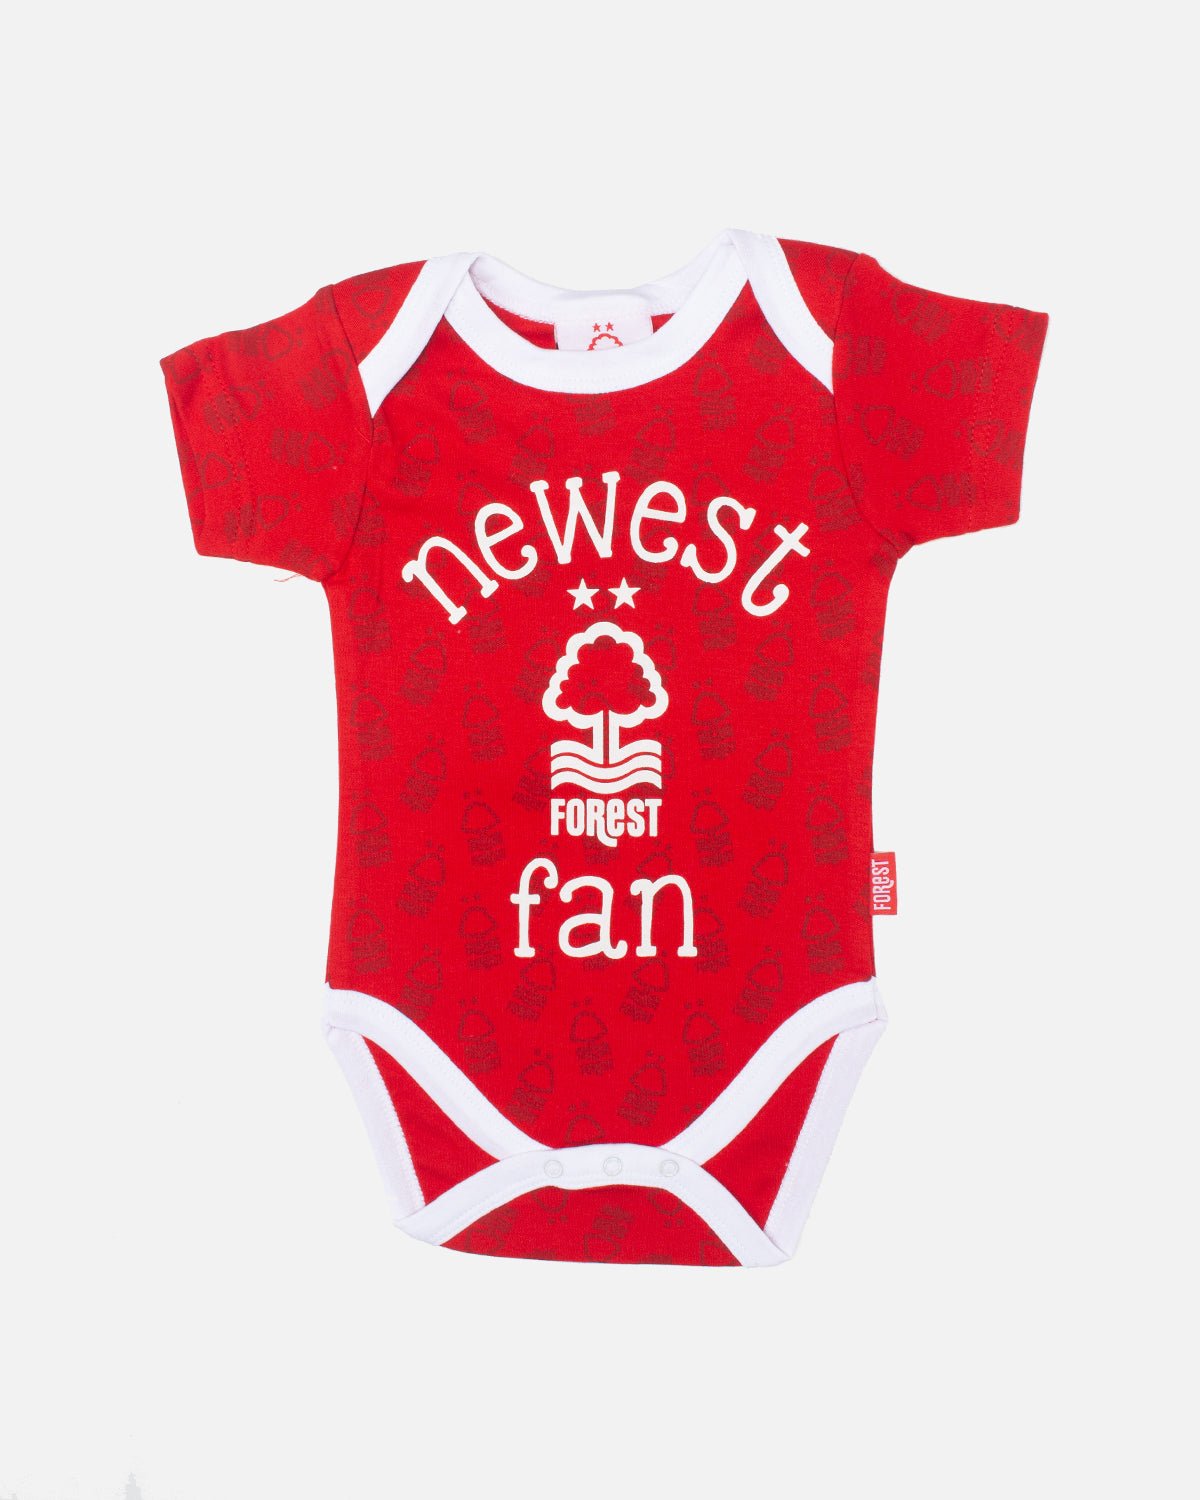 NFFC Multi Crest Baby Bodysuit - Nottingham Forest FC